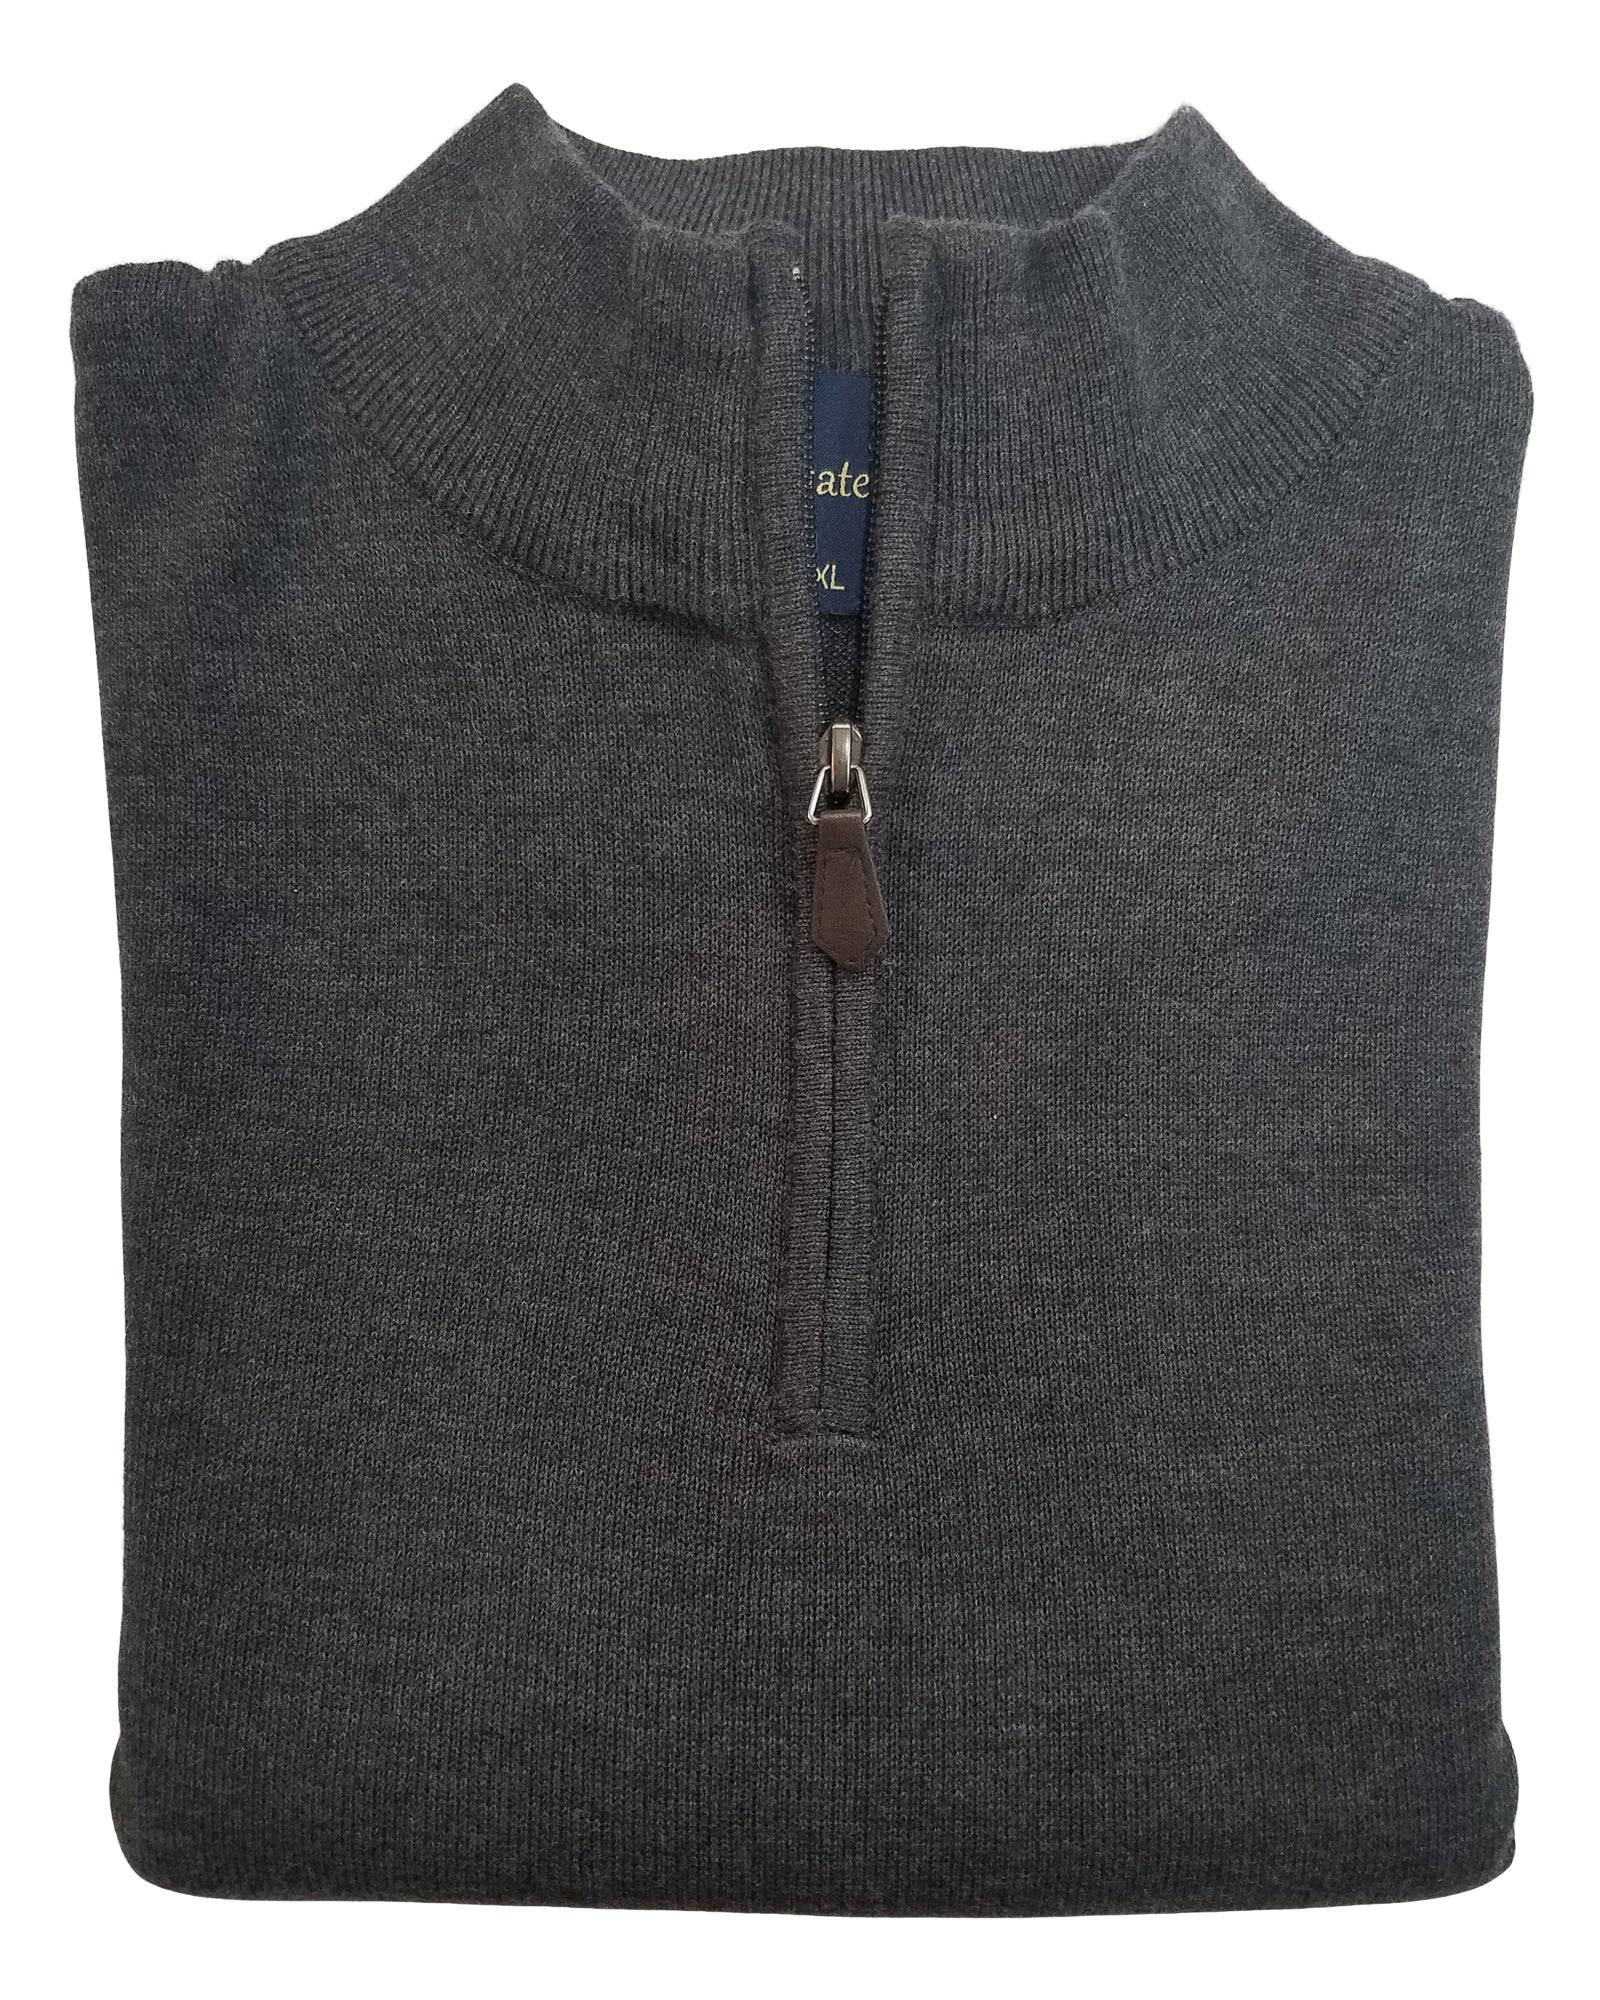 1/4 Zip Mock Sweater Vest in Charcoal Cotton Blend - Rainwater's Men's Clothing and Tuxedo Rental